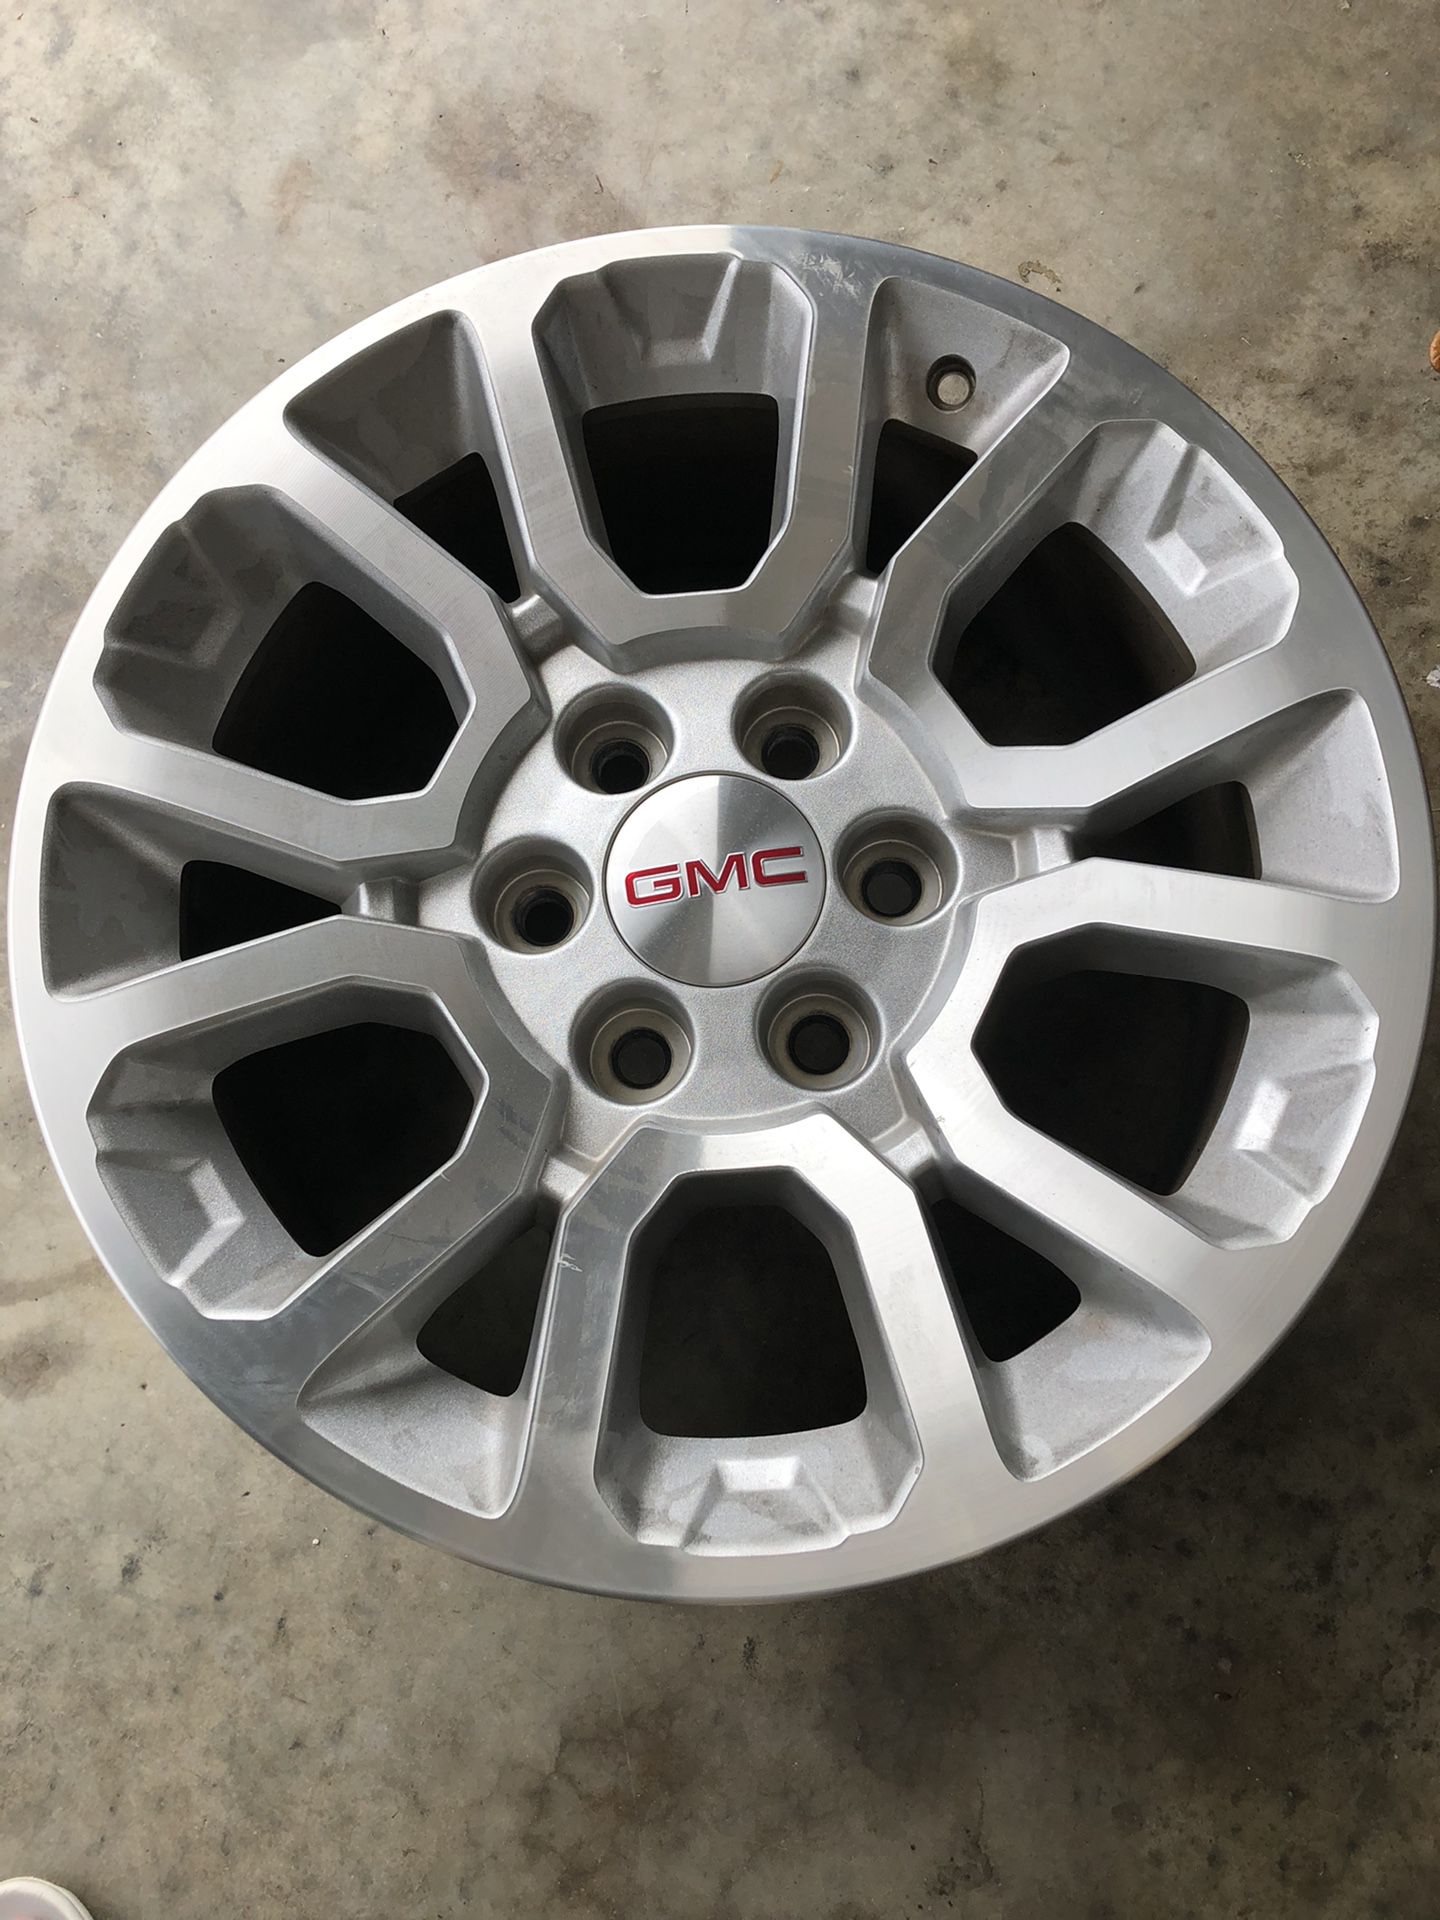 Aluminum GMC wheels 18 inch rims set of four